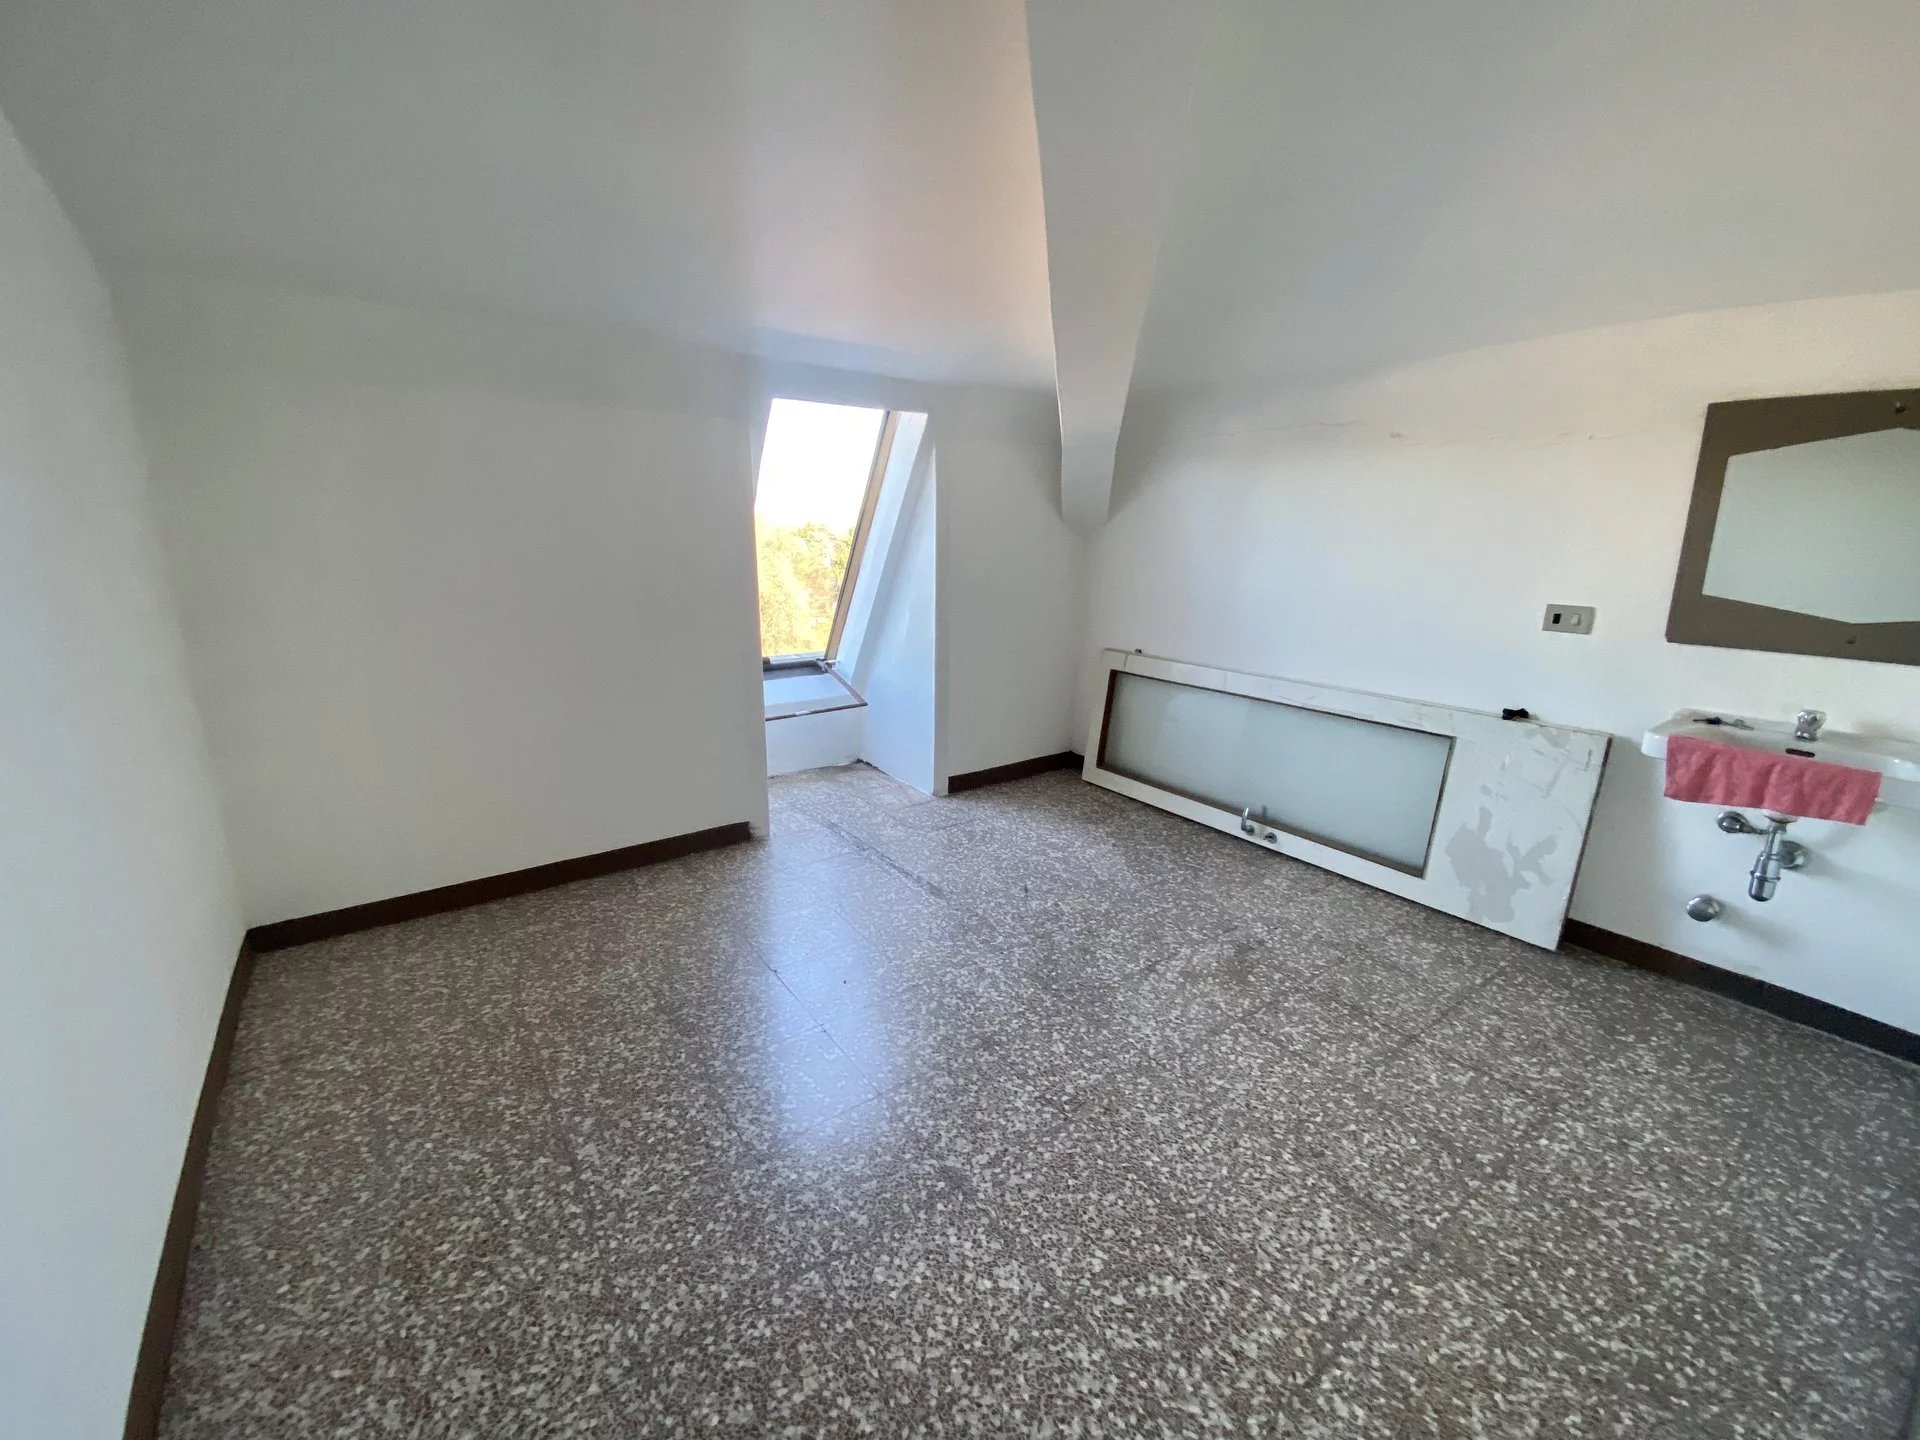 Sale Apartment - Olgiate Comasco - Italy